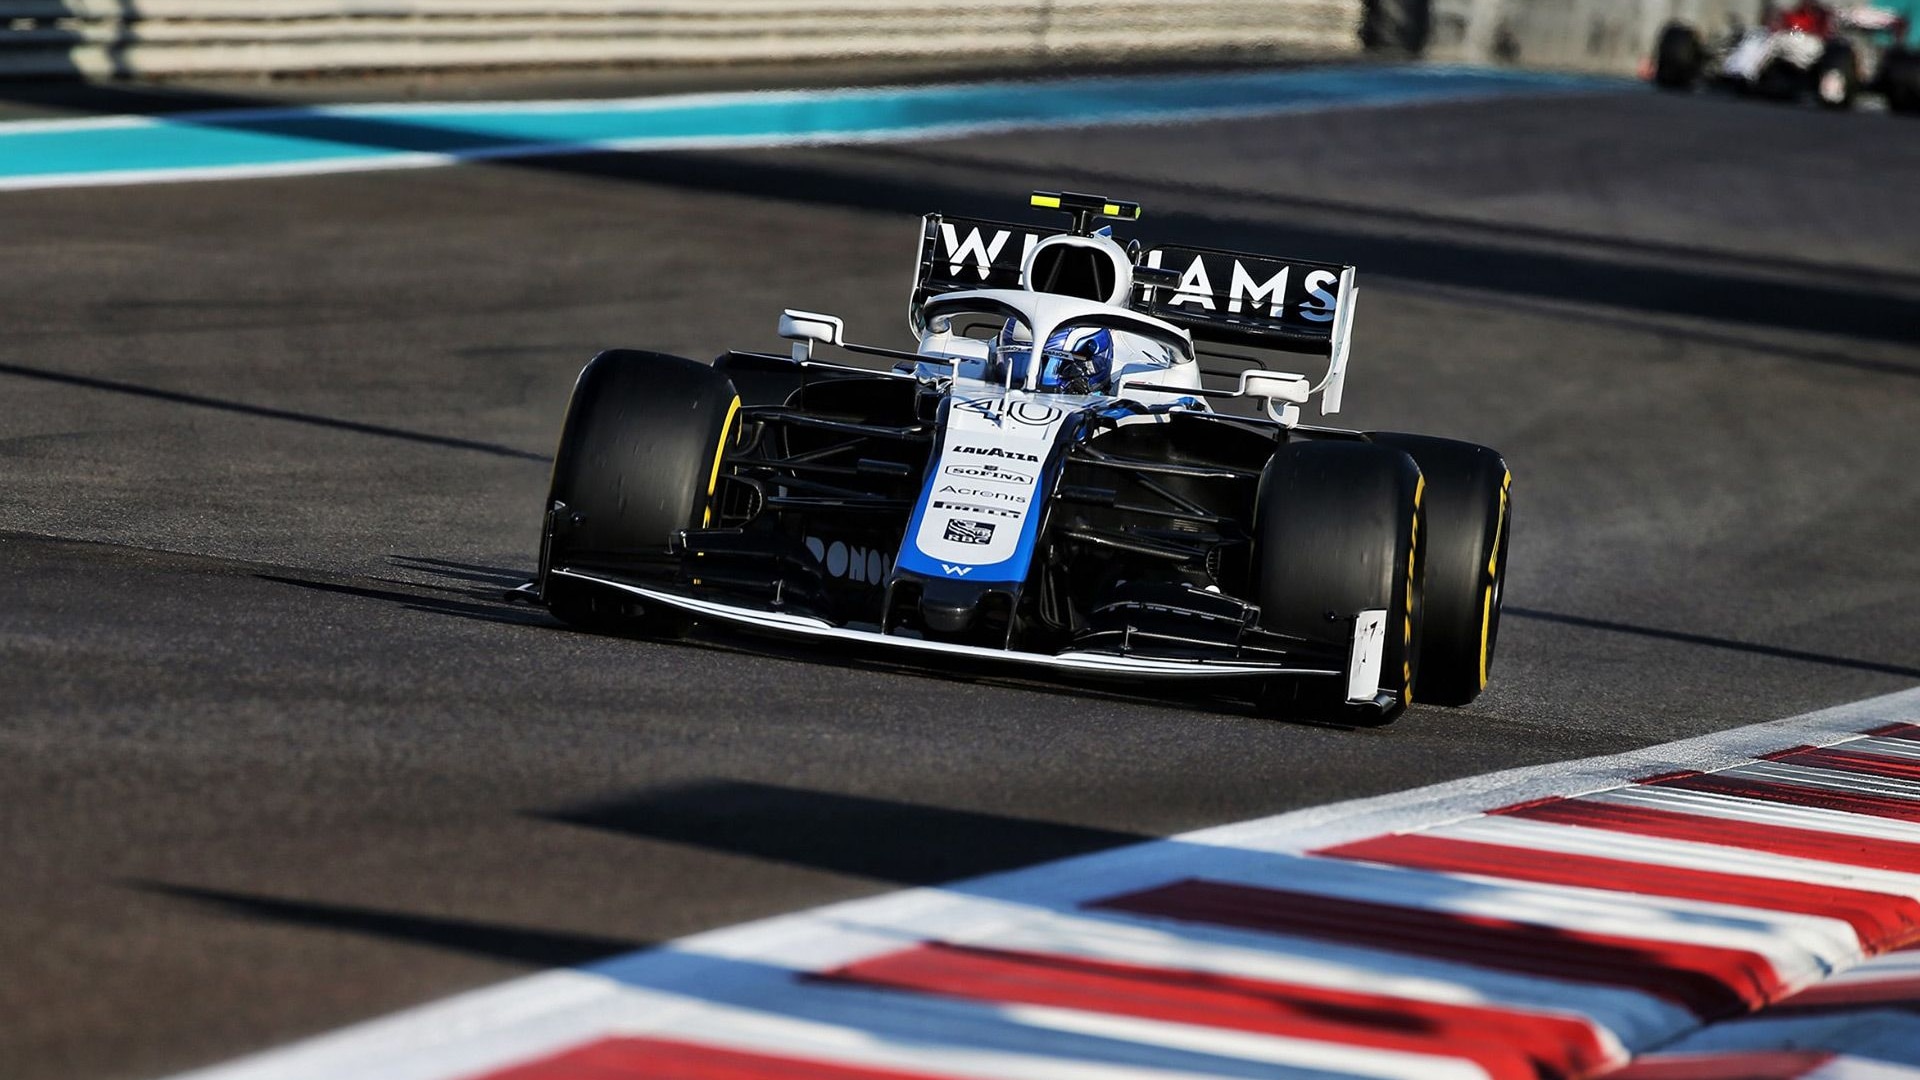 Williams at the 2020 Formula One Abu Dhabi Grand Prix